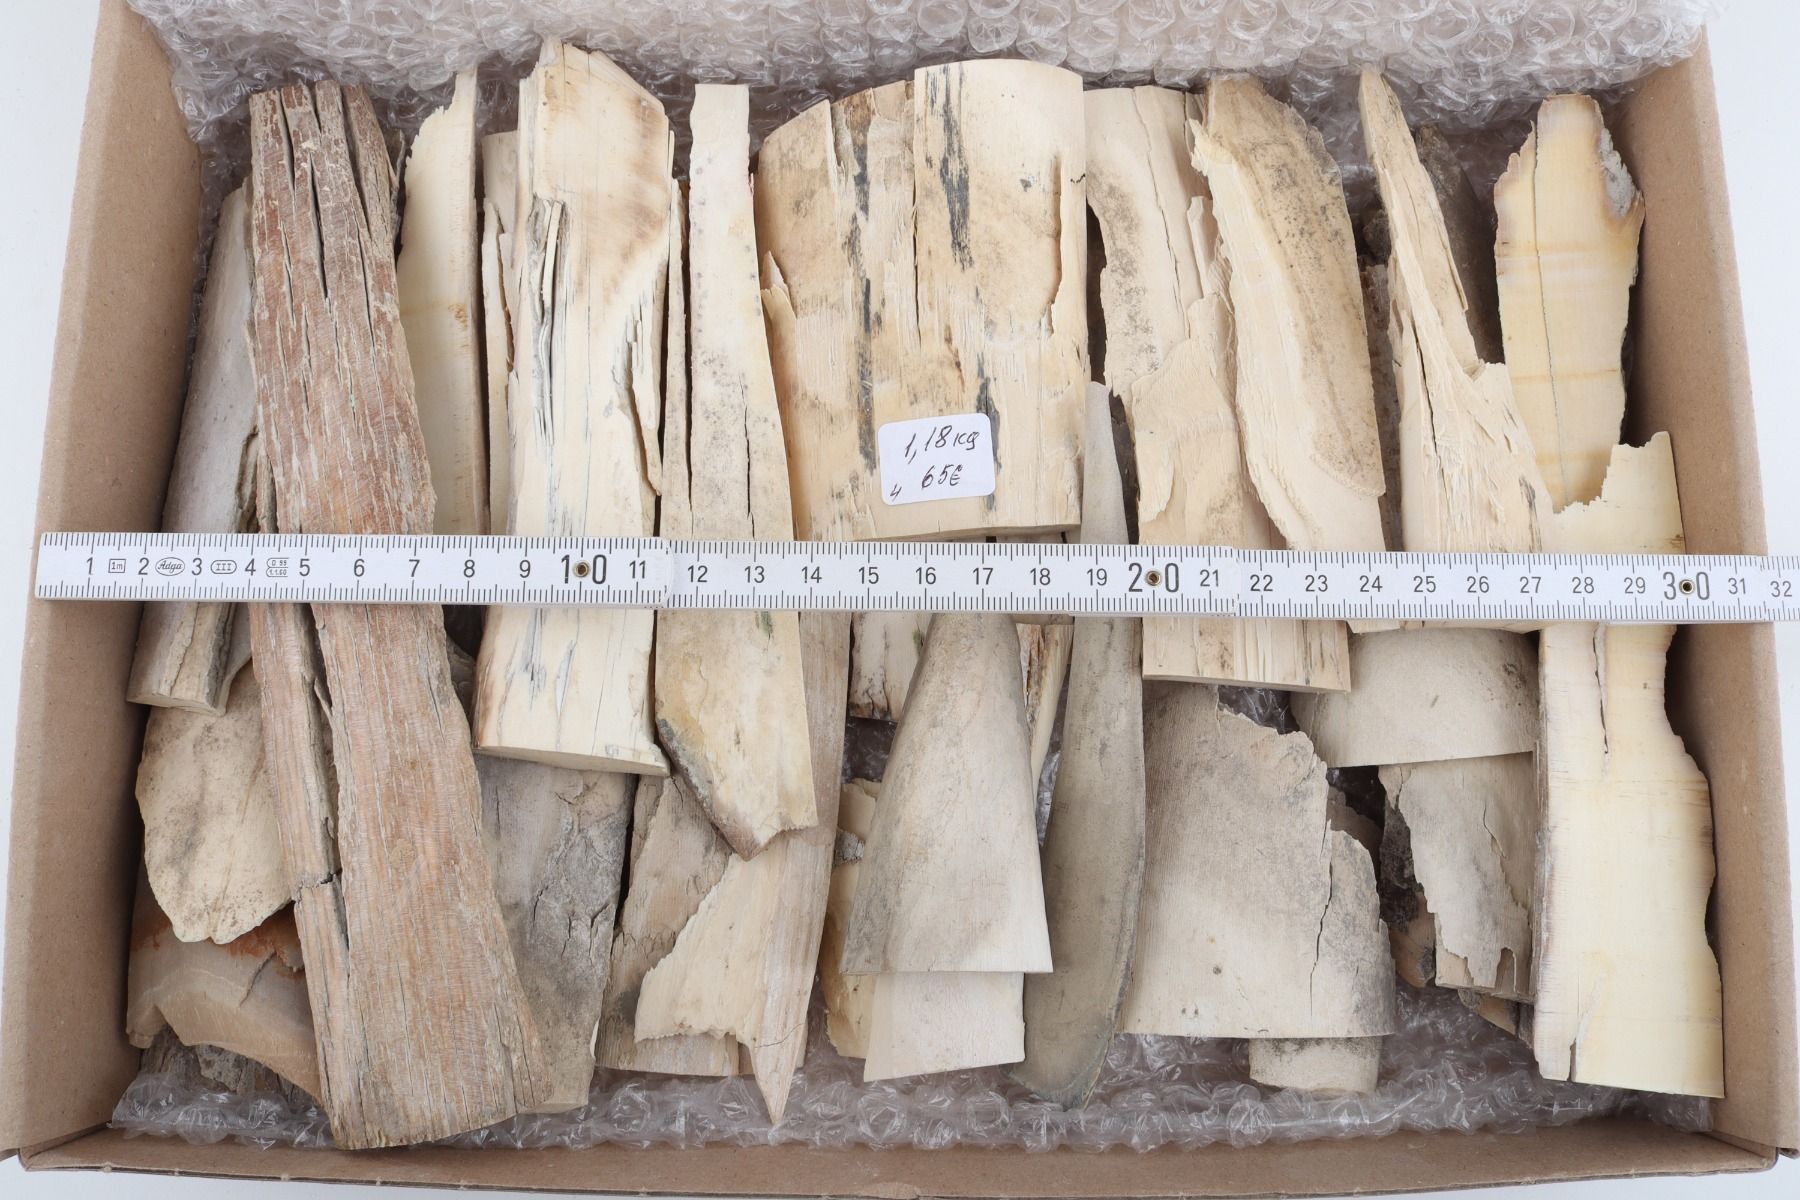 Raw mammoth ivory offcuts